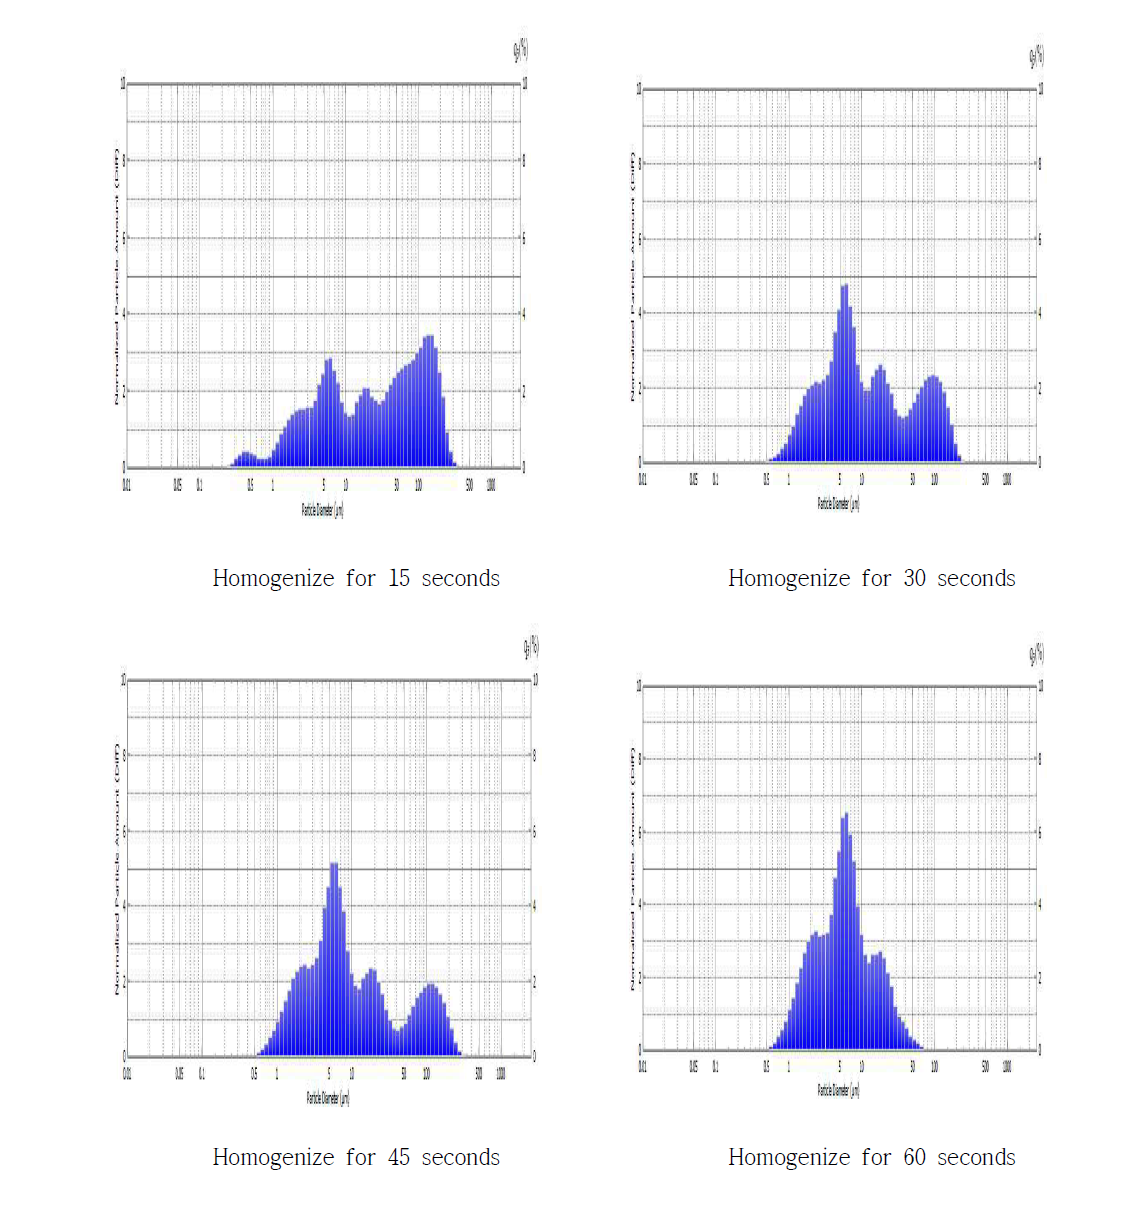 Size distribution analysis by homogenization